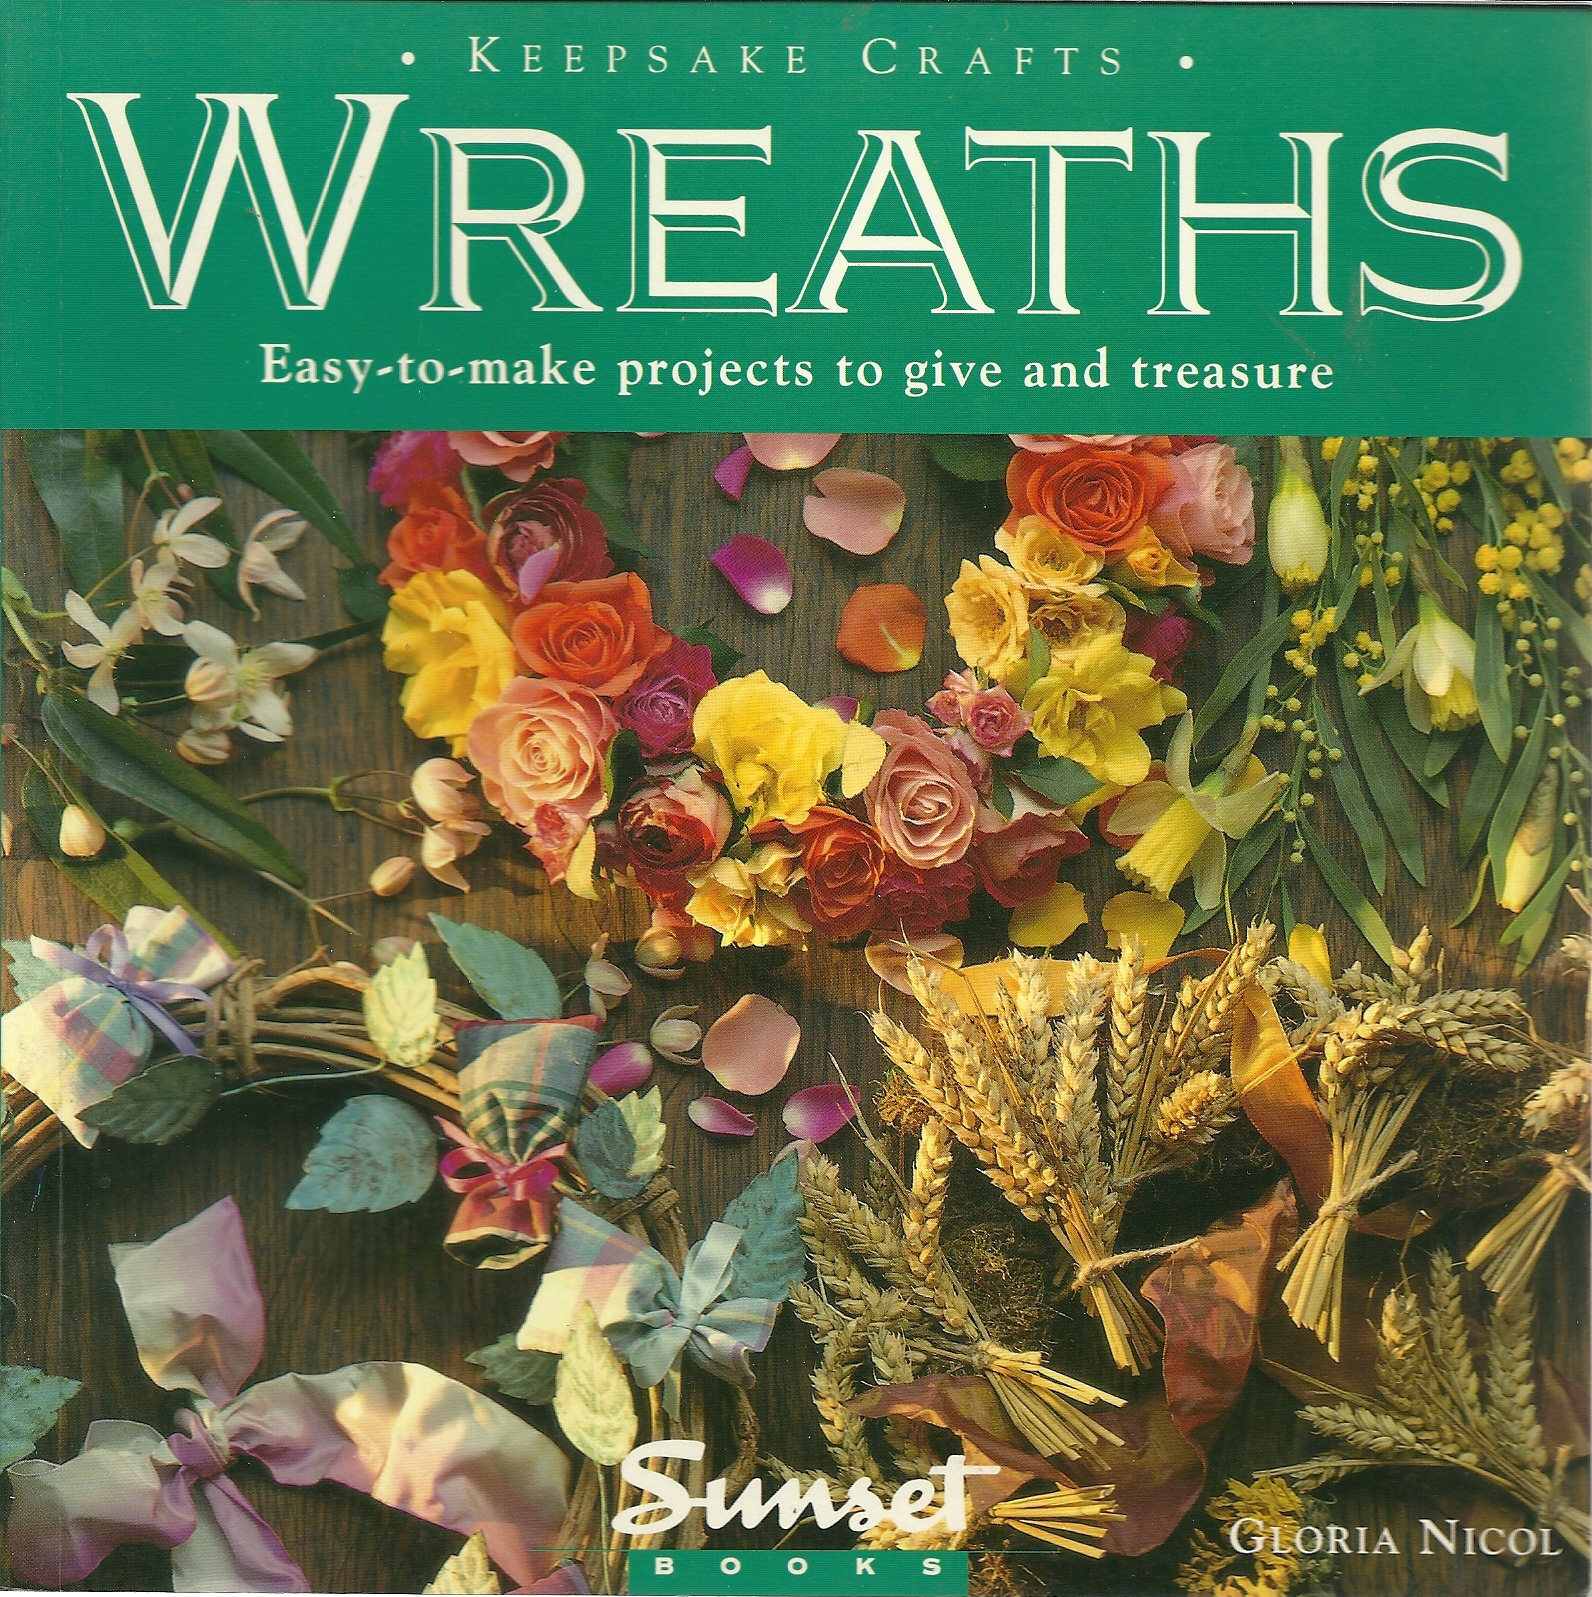 Wreaths Keepsake Crafts Sunset Book All Season Gloria Nicol - $6.99